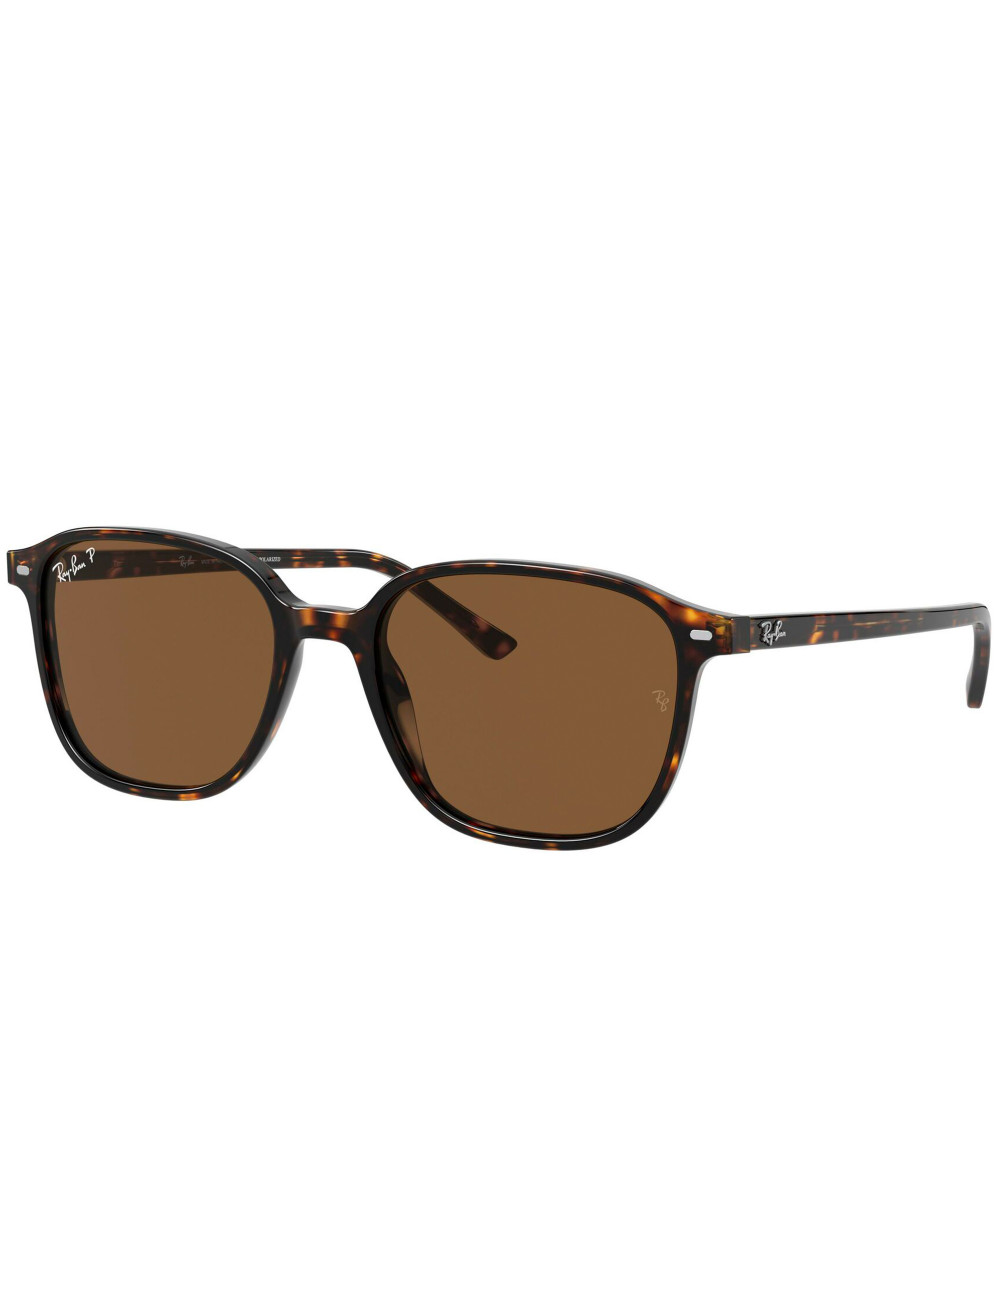 Ray Ban Leonard RB2193 902/57 polarized sunglasses 